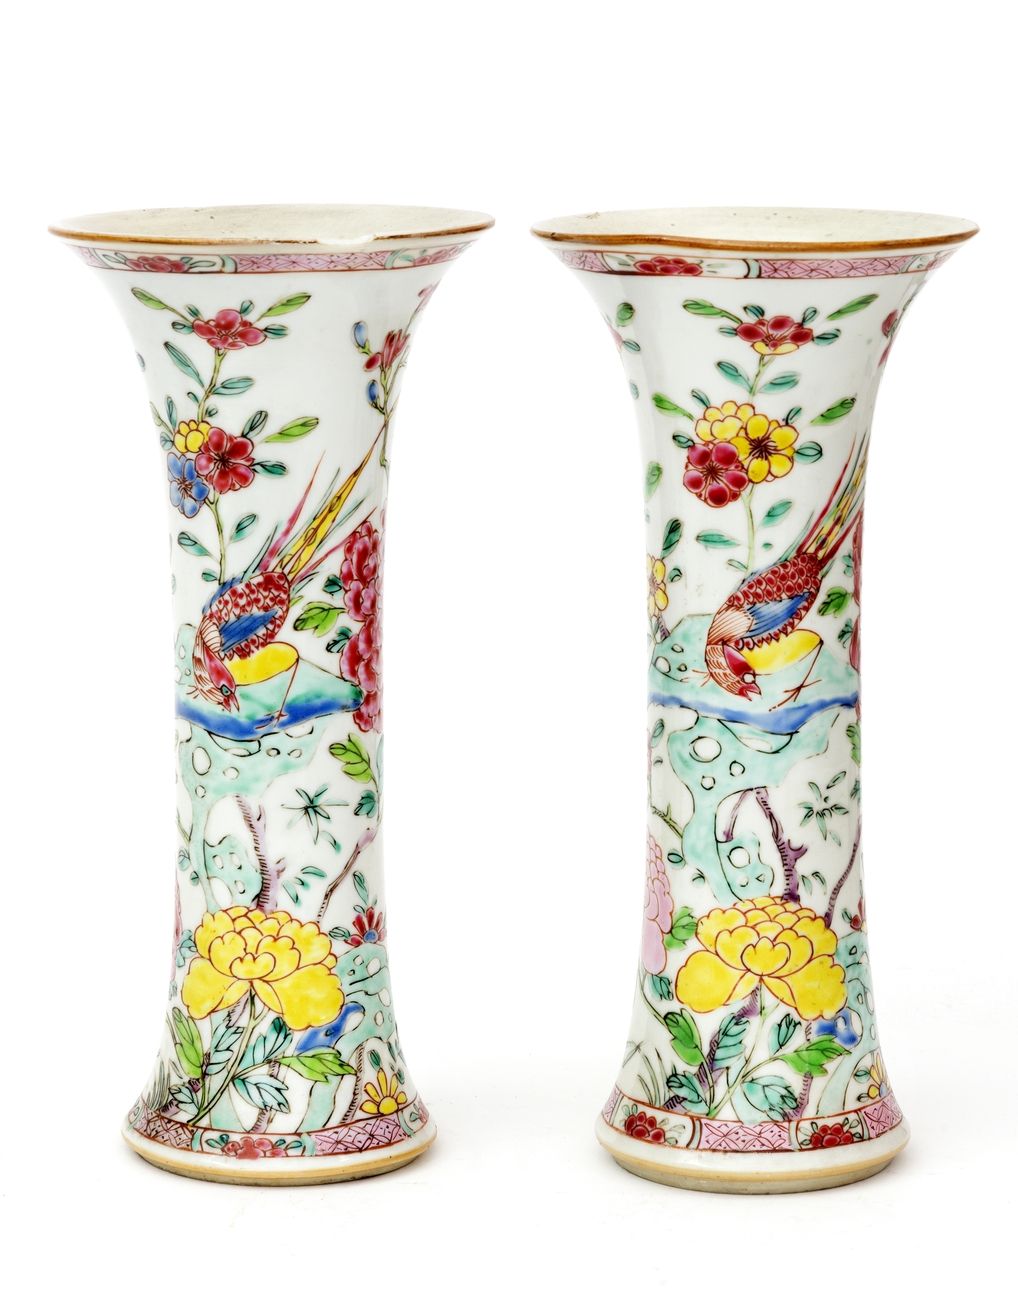 Null 中国，乾隆时期（1736-1795）
一对瓷质圆锥花瓶，上面有粉饰的岩石和植物上的鸟类。
高度 : 24 cm
(修复的颈部)